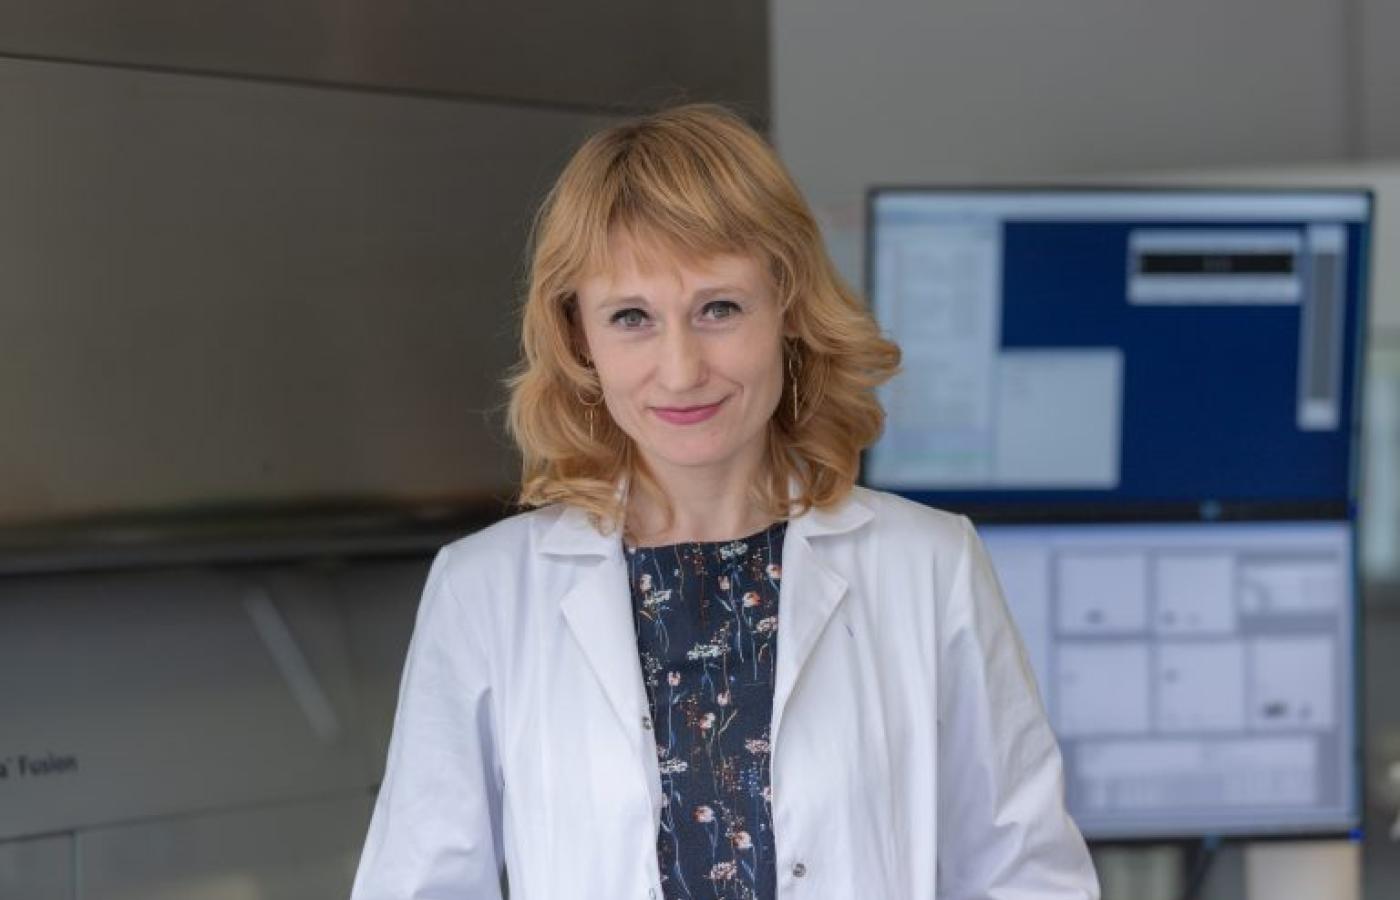 prof. Natalia Marek-Trzonkowska